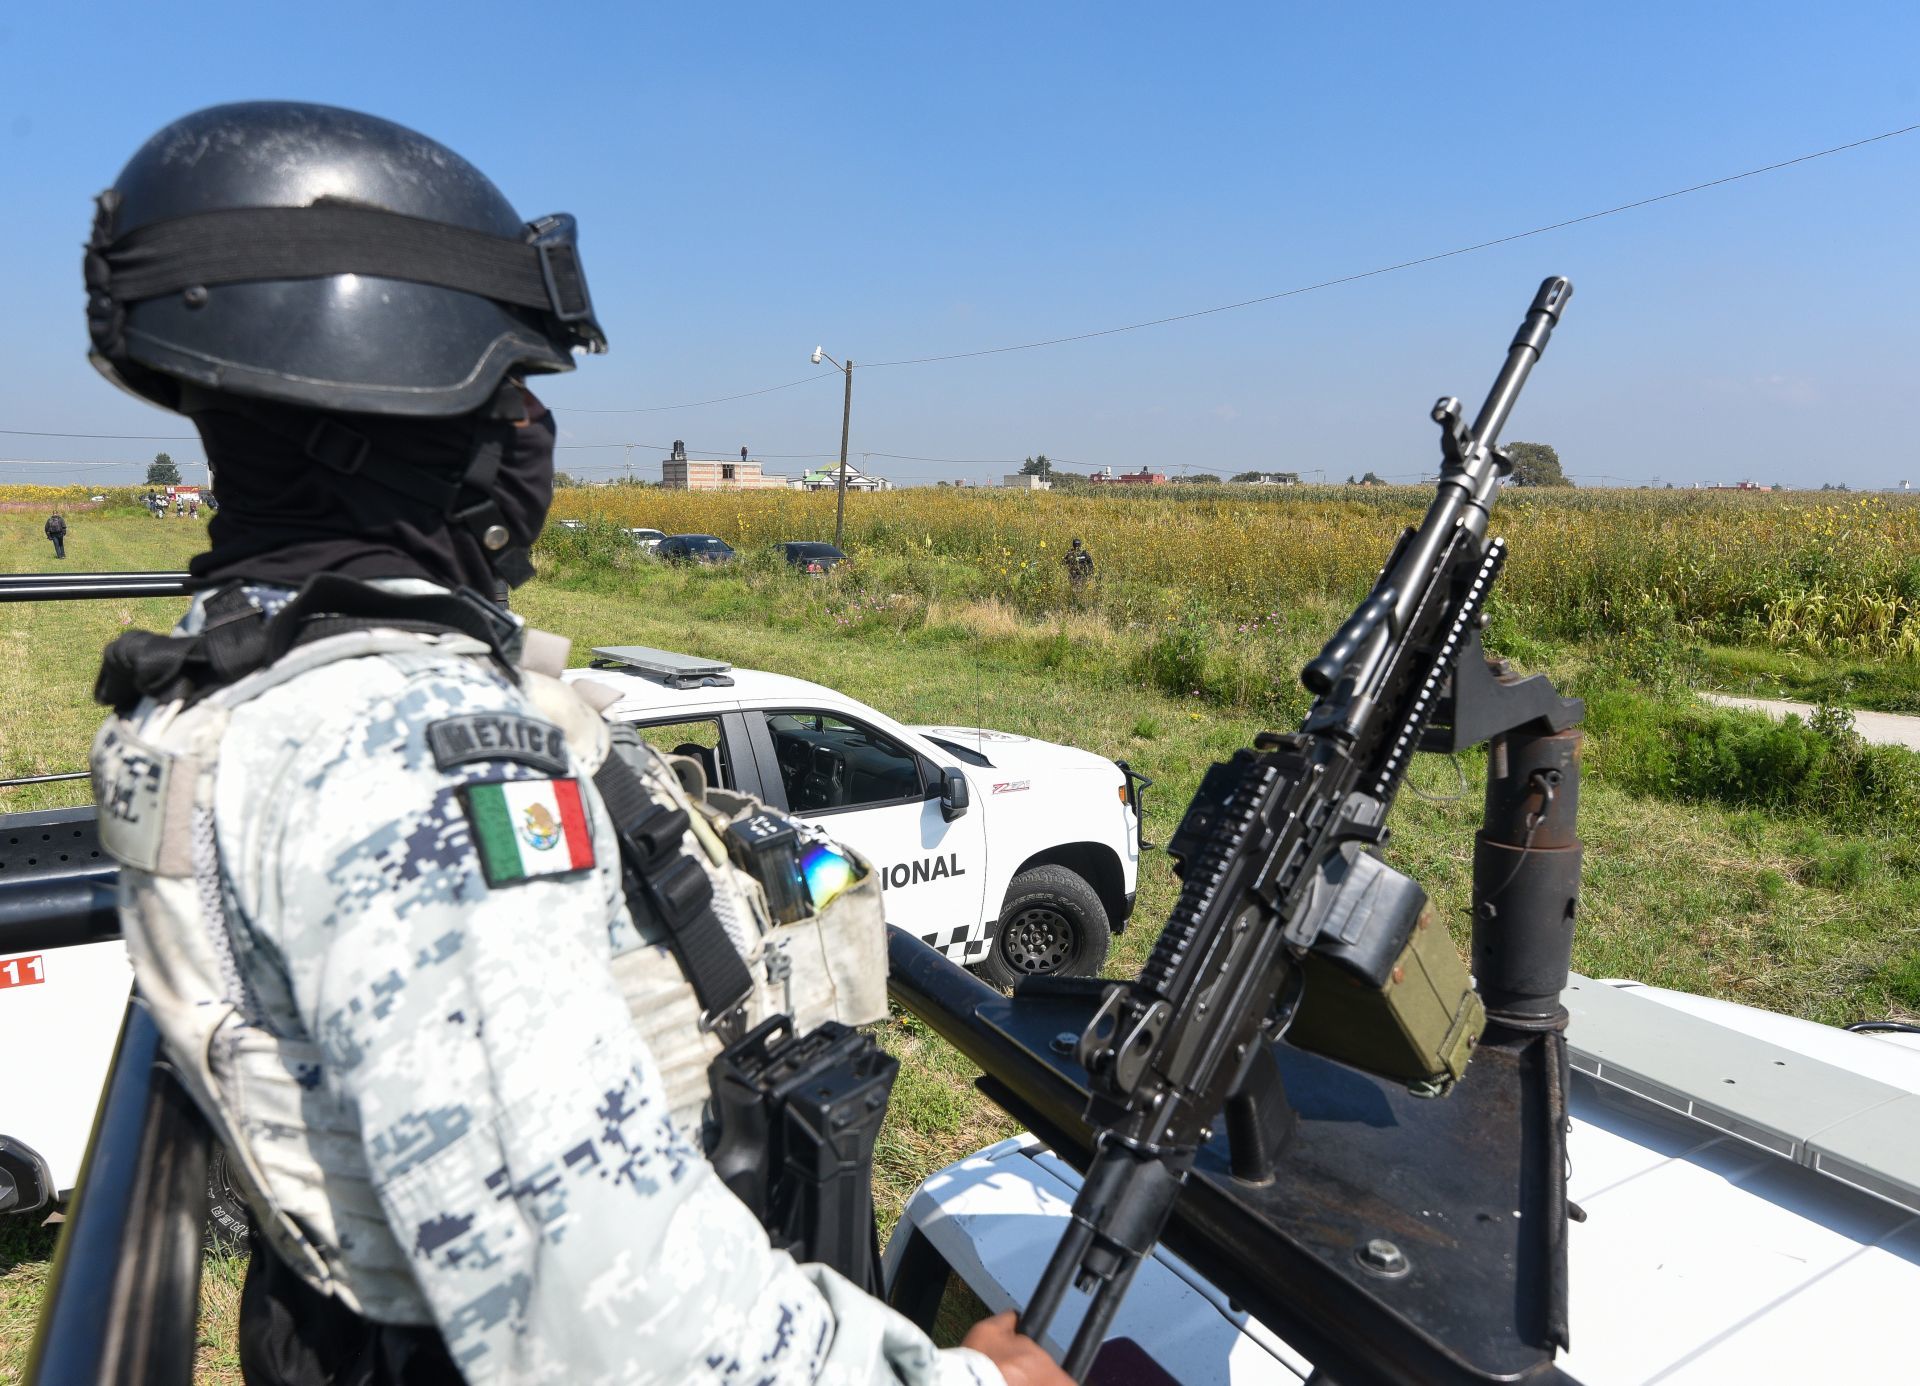 Matan en emboscada a comandante de la Policía Ministerial y Estatal en Guerrero Q3AUDLEEHRFLPH23MVS3K6WPIM